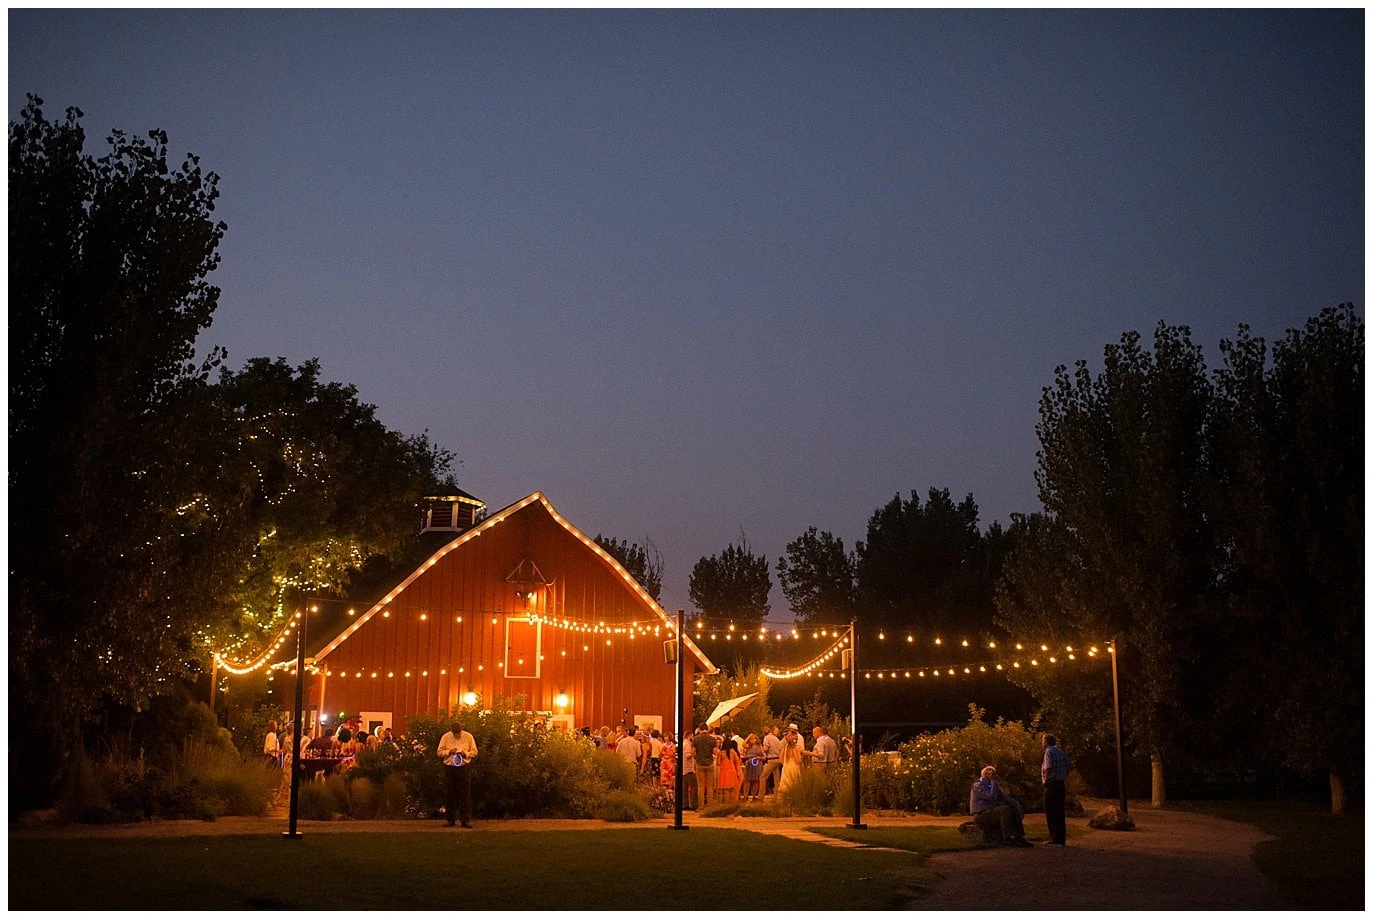 Denver Botanic Gardens at Chatfield wedding barn at night